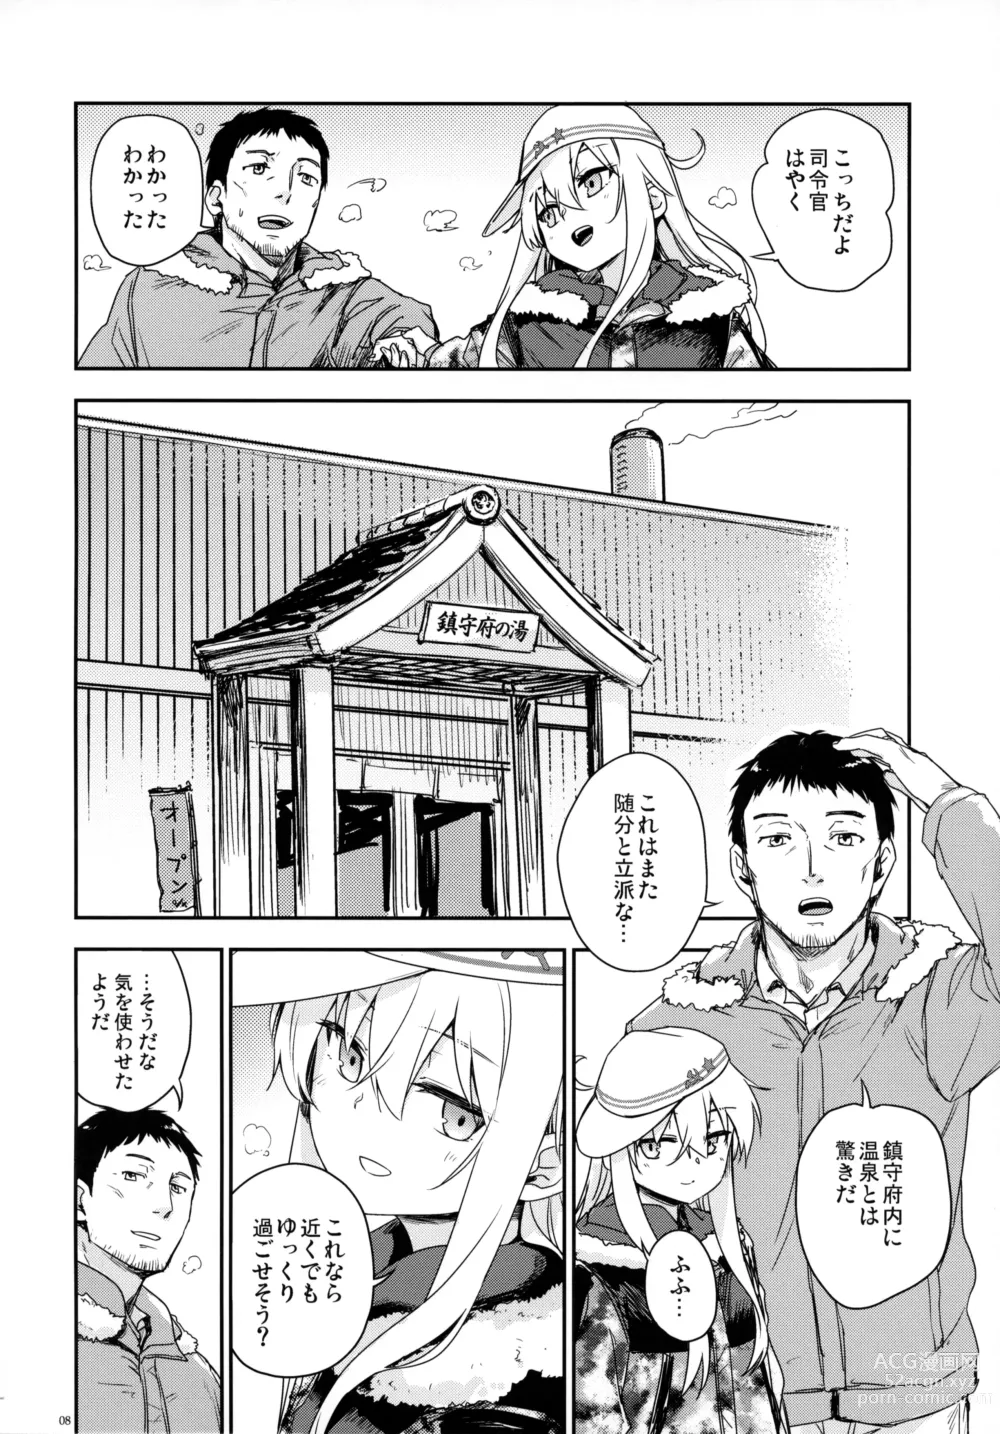 Page 7 of doujinshi Bep Onsen Futaritabi 5